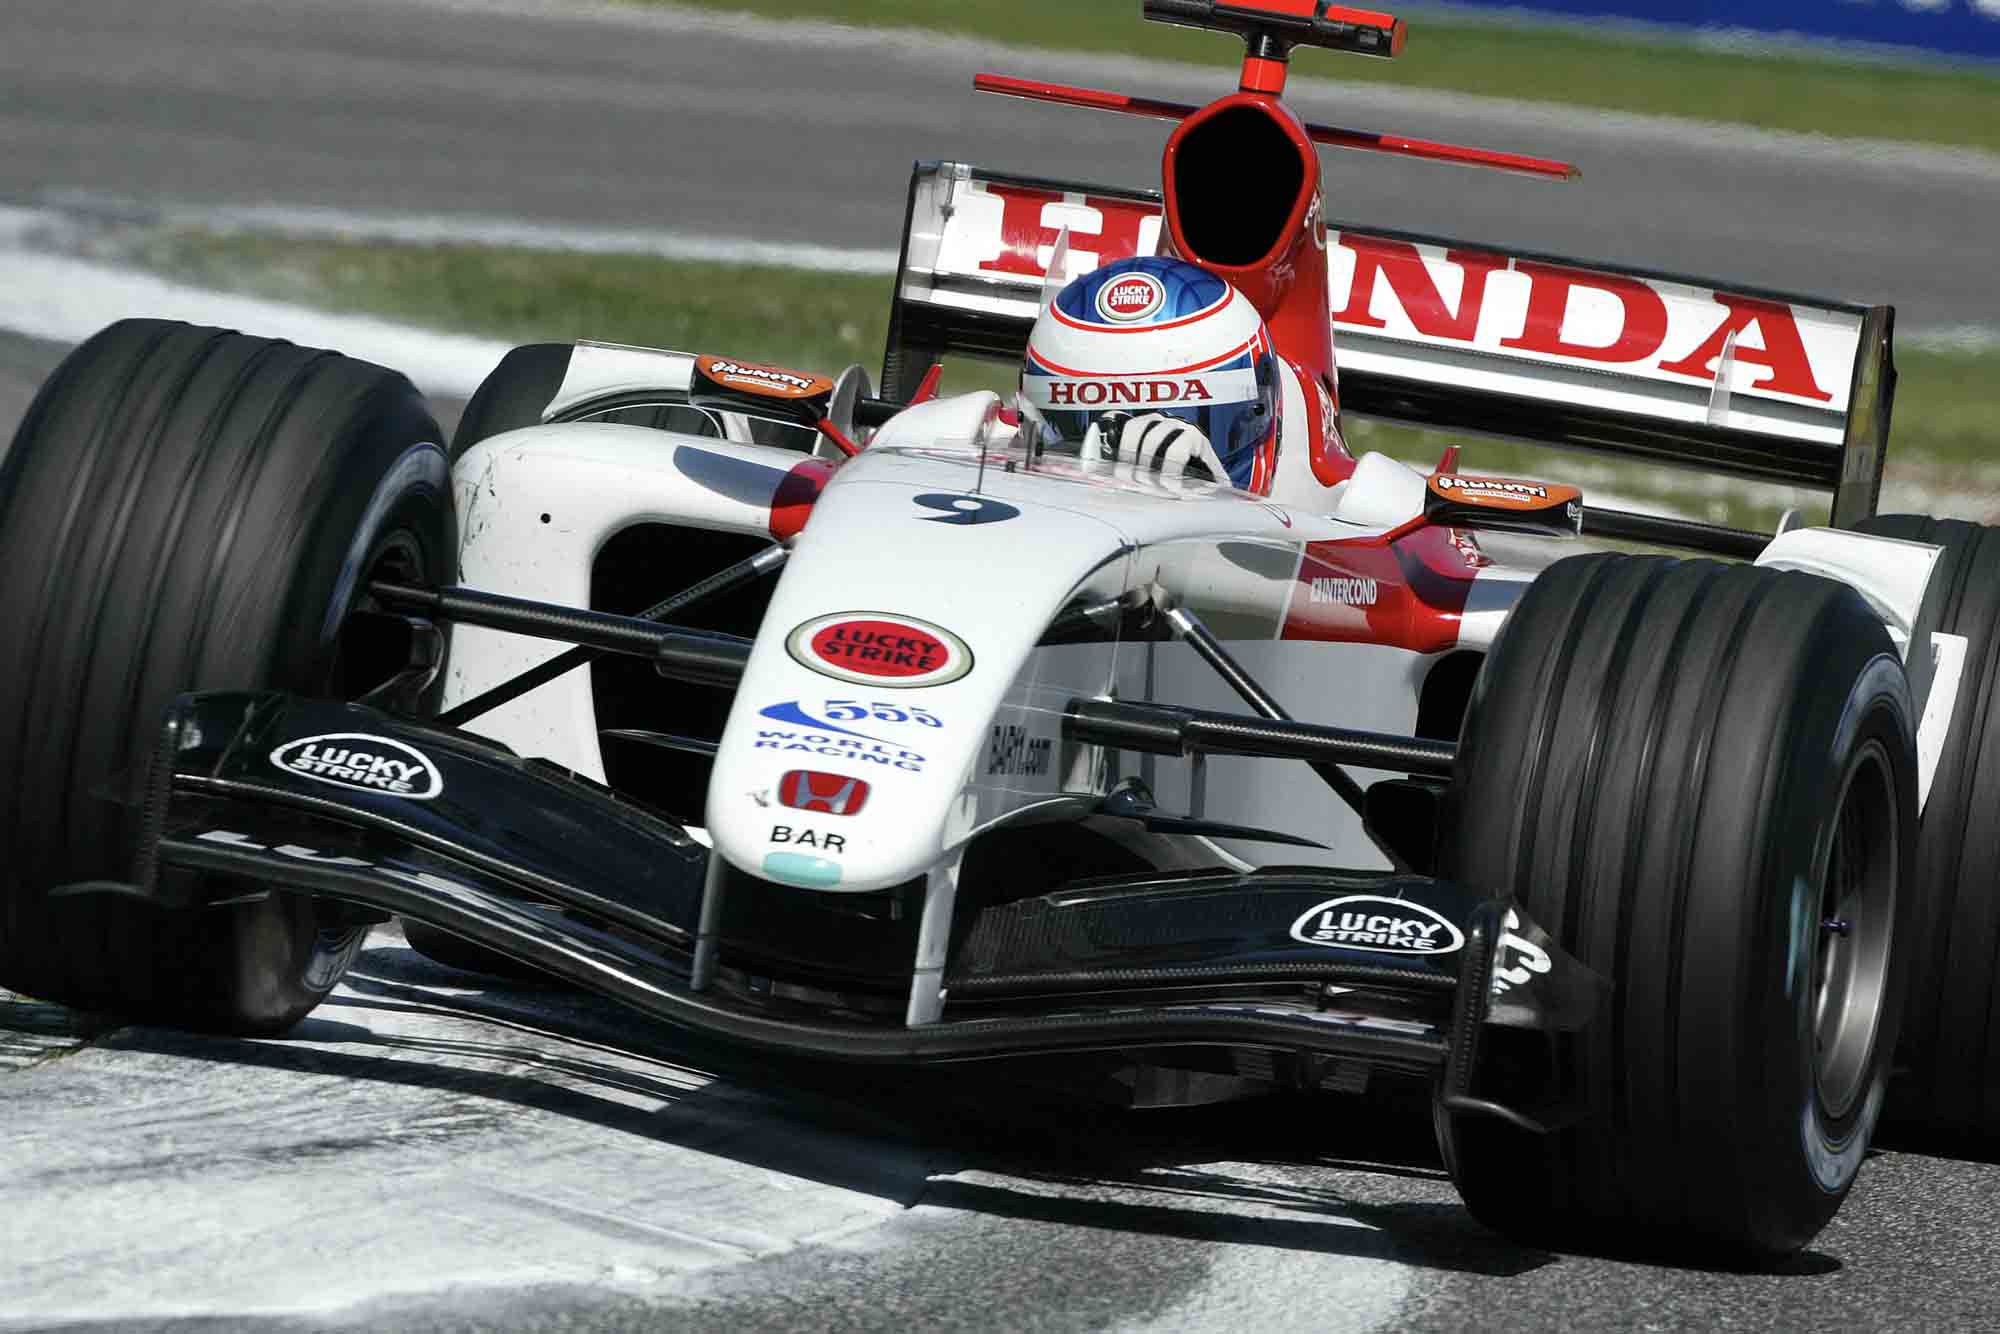 Jenson Button rides the chicane in his BAR-Honda at 2004 San Marino GP